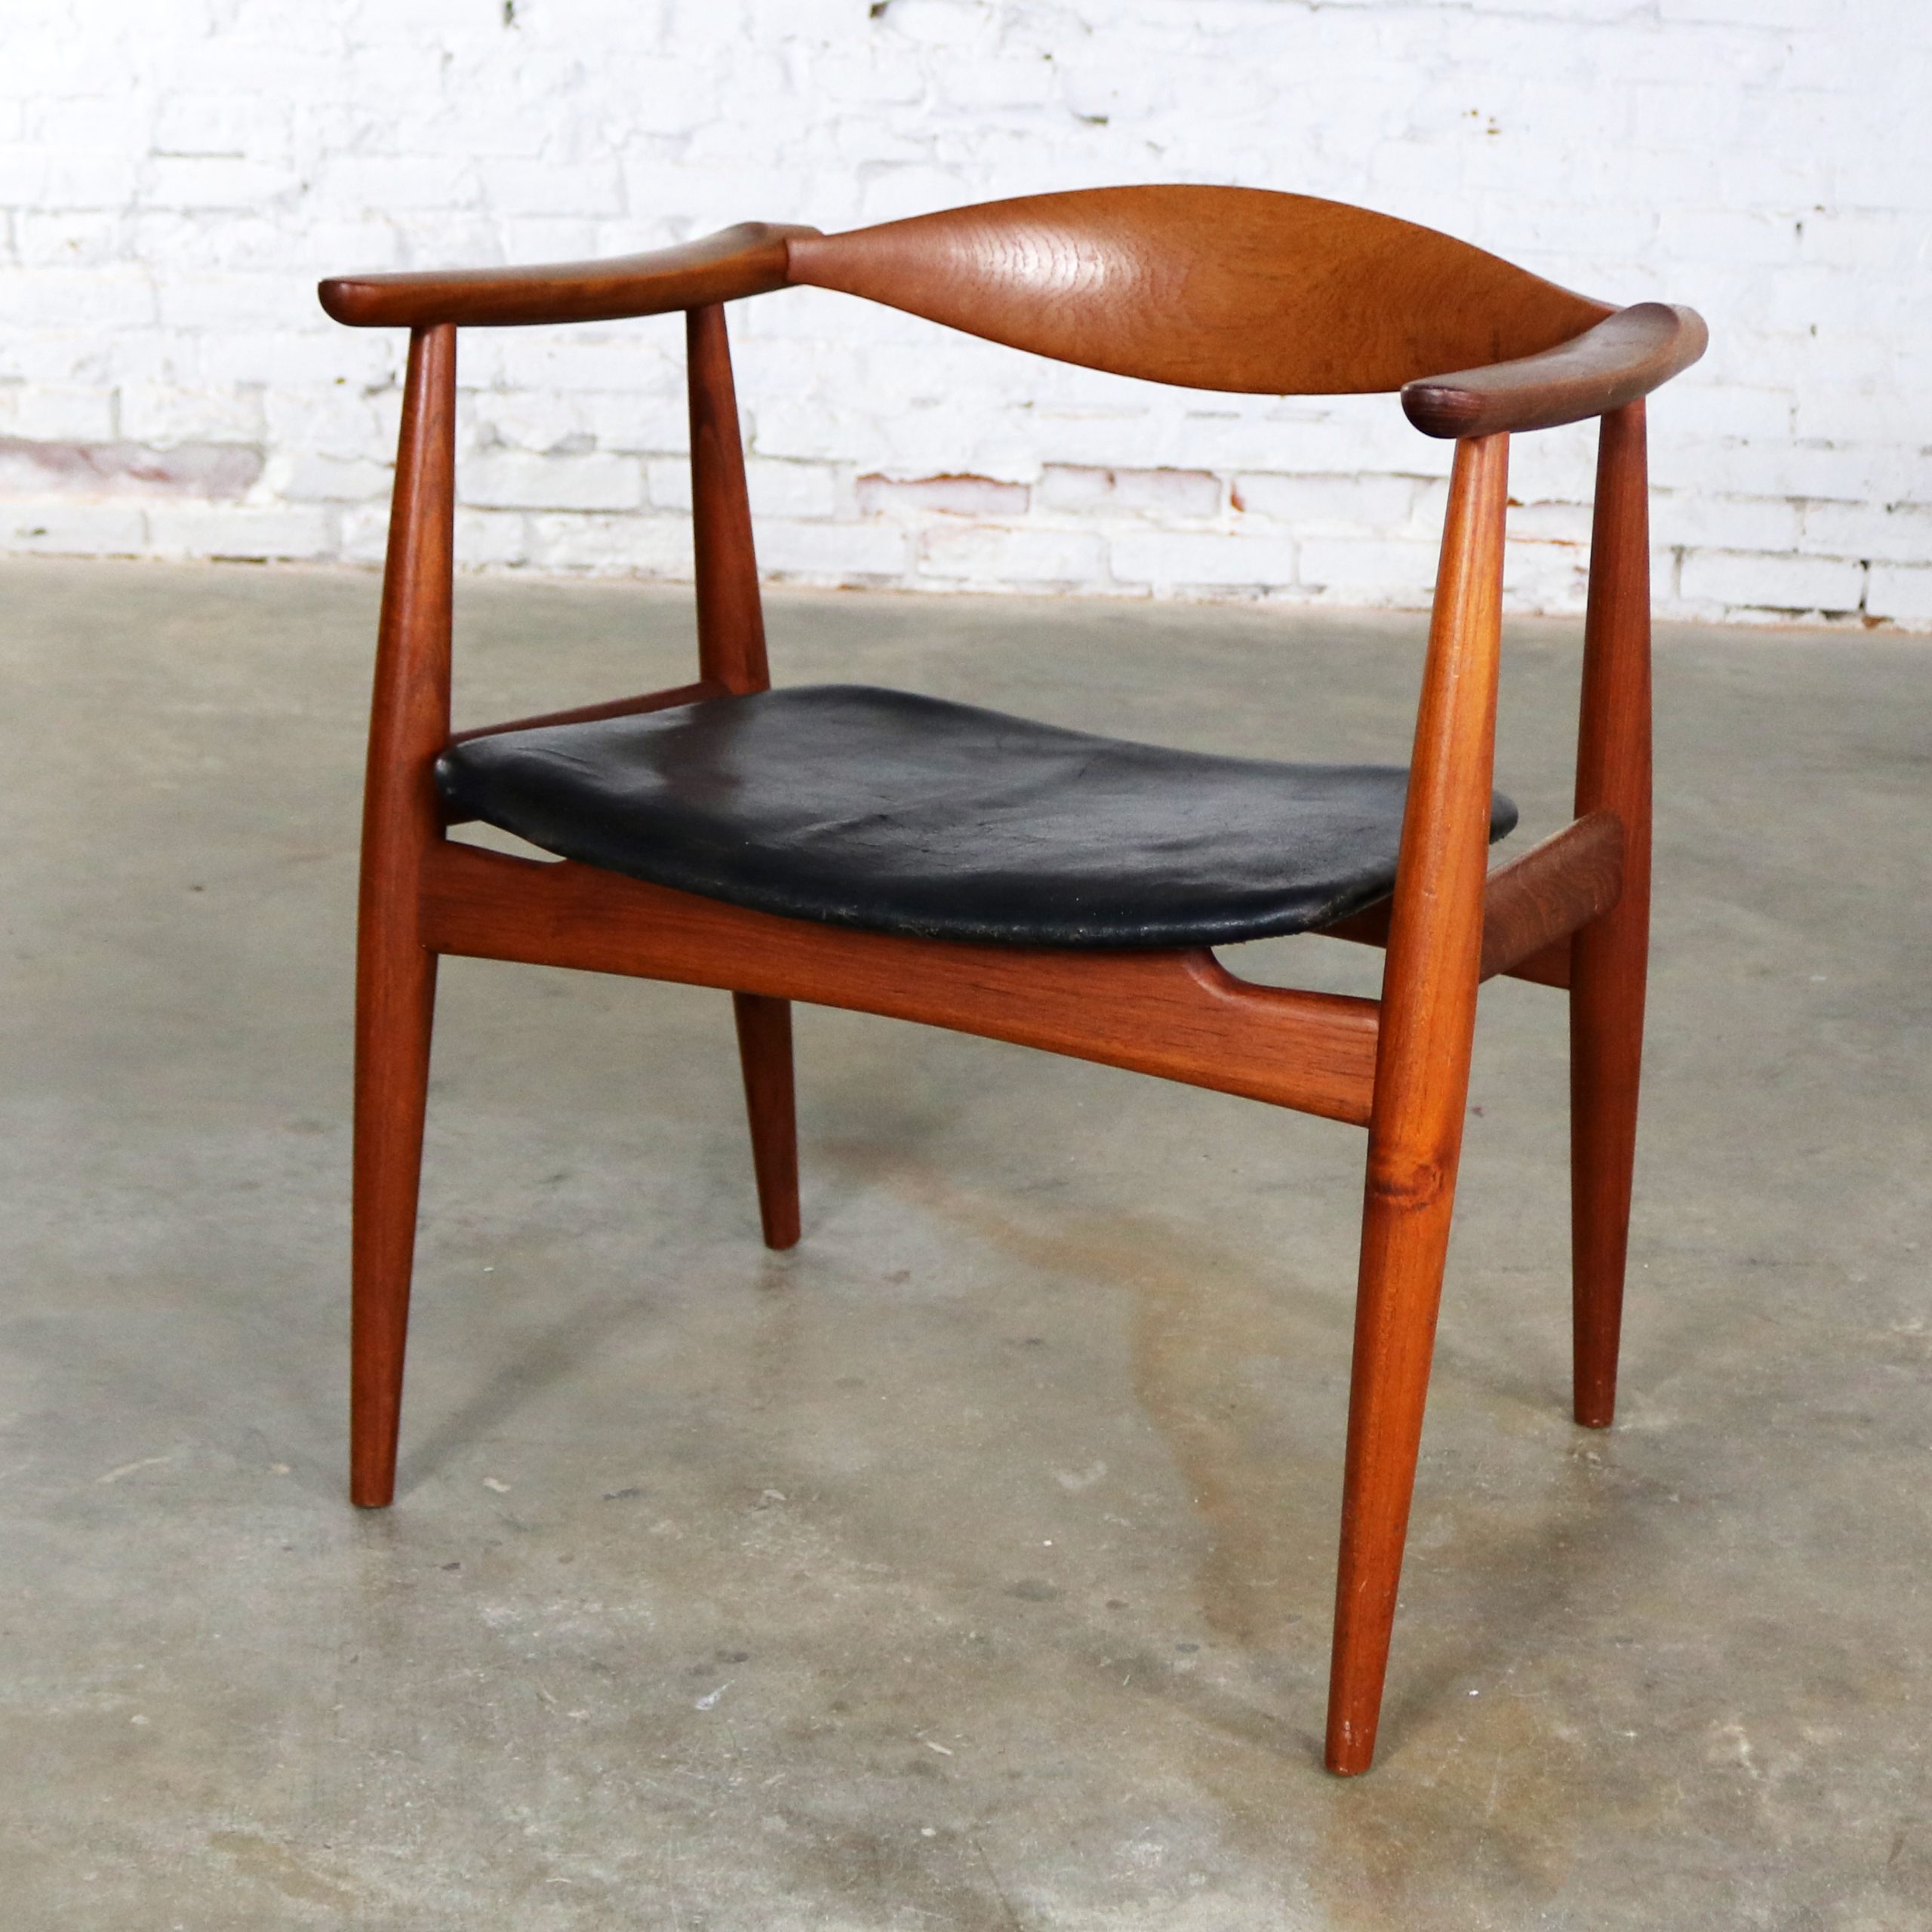 Hans Wegner CH 35 Chair for Carl Hansen and Son Vintage Scandinavian Modern in Teak